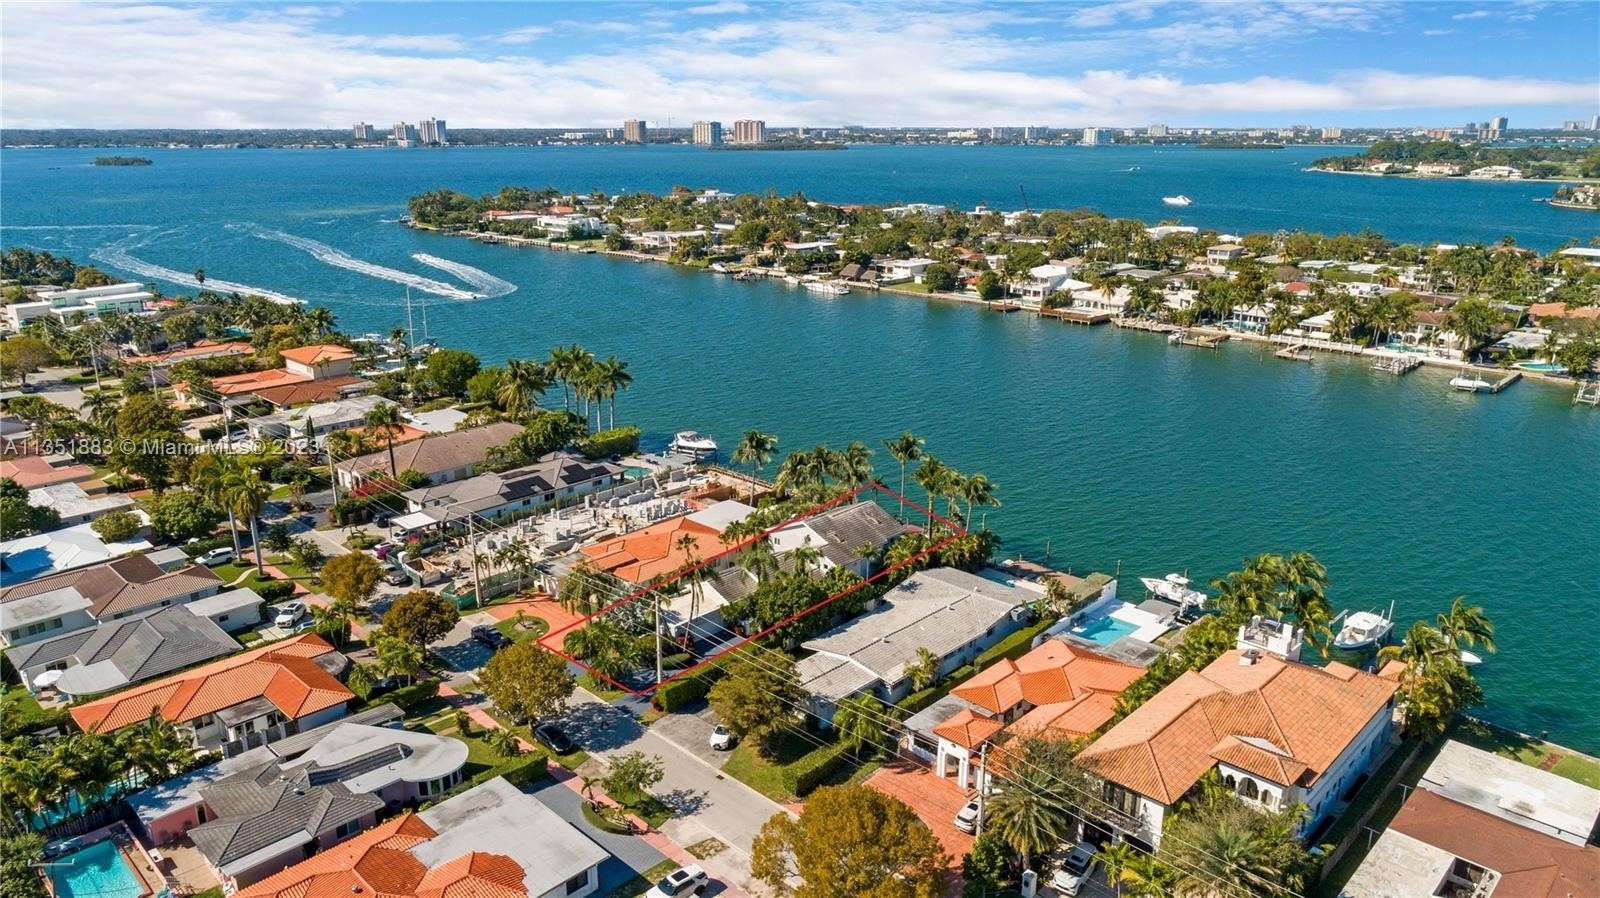 Property at Normandy Shores, Miami Beach, FL 33141